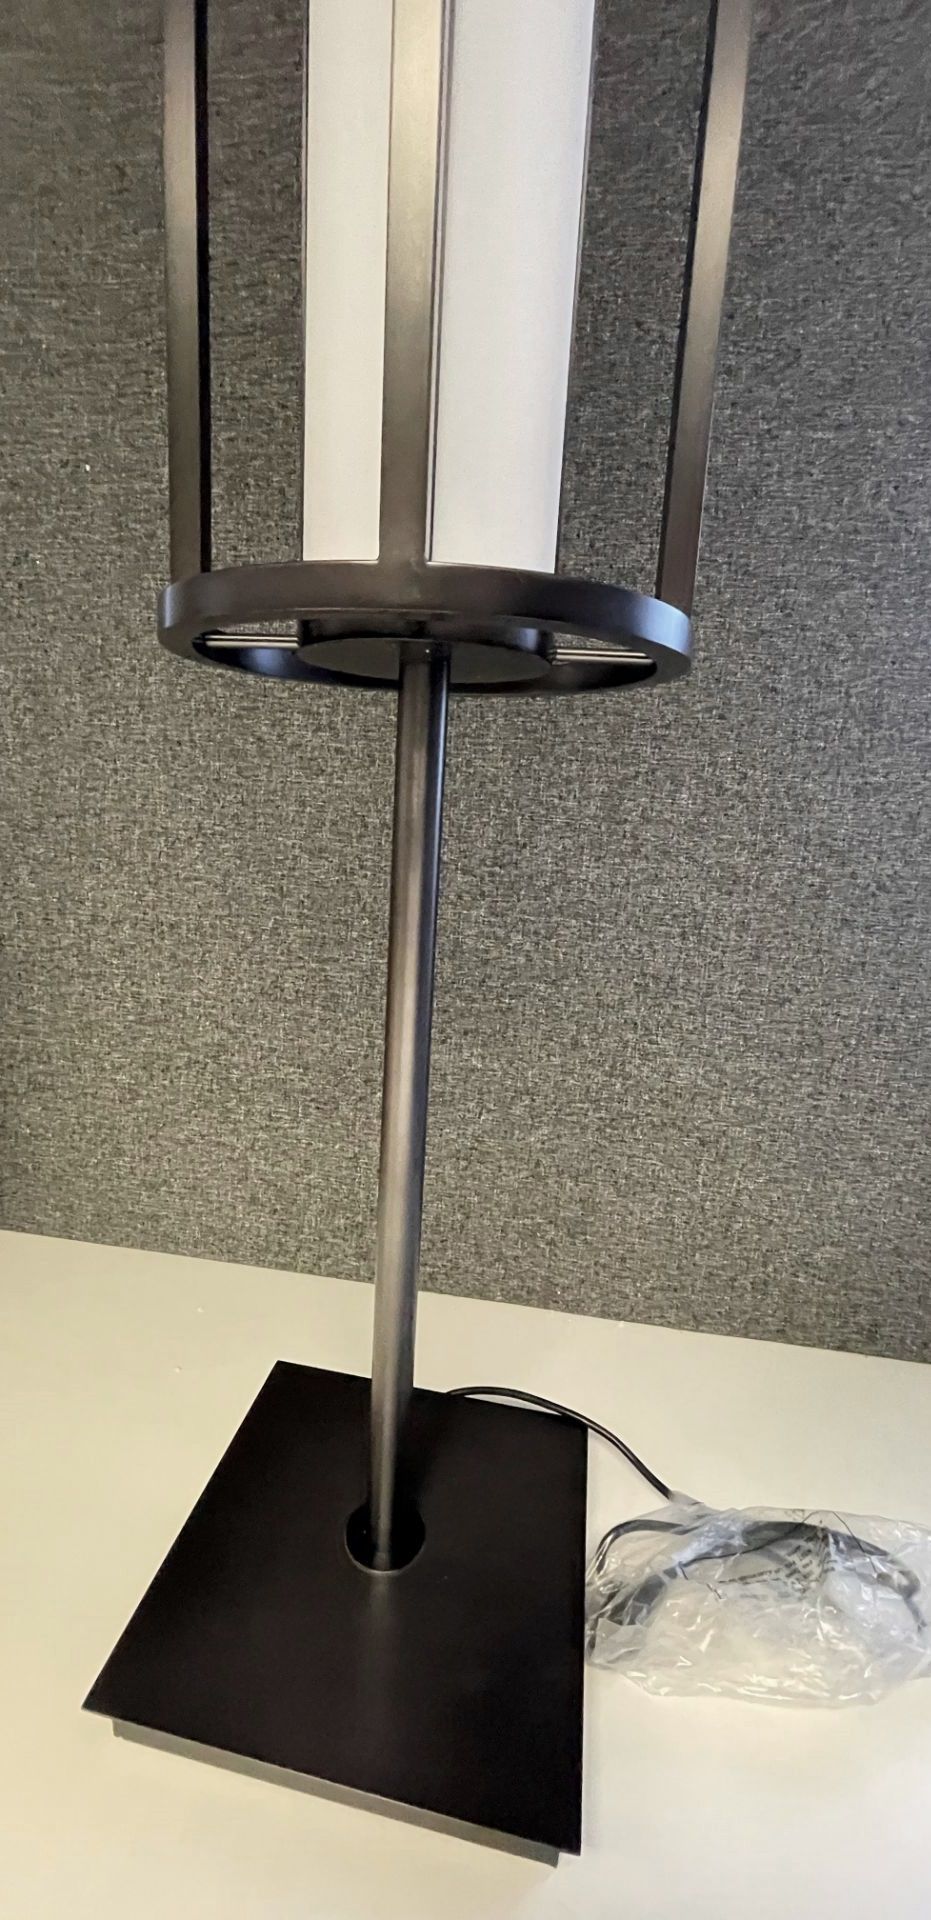 1 x Chelsom Art Deco Style Floor Lamp in Black/Bronze Height 161cm x 30cm Diameter - Unused - Image 6 of 6